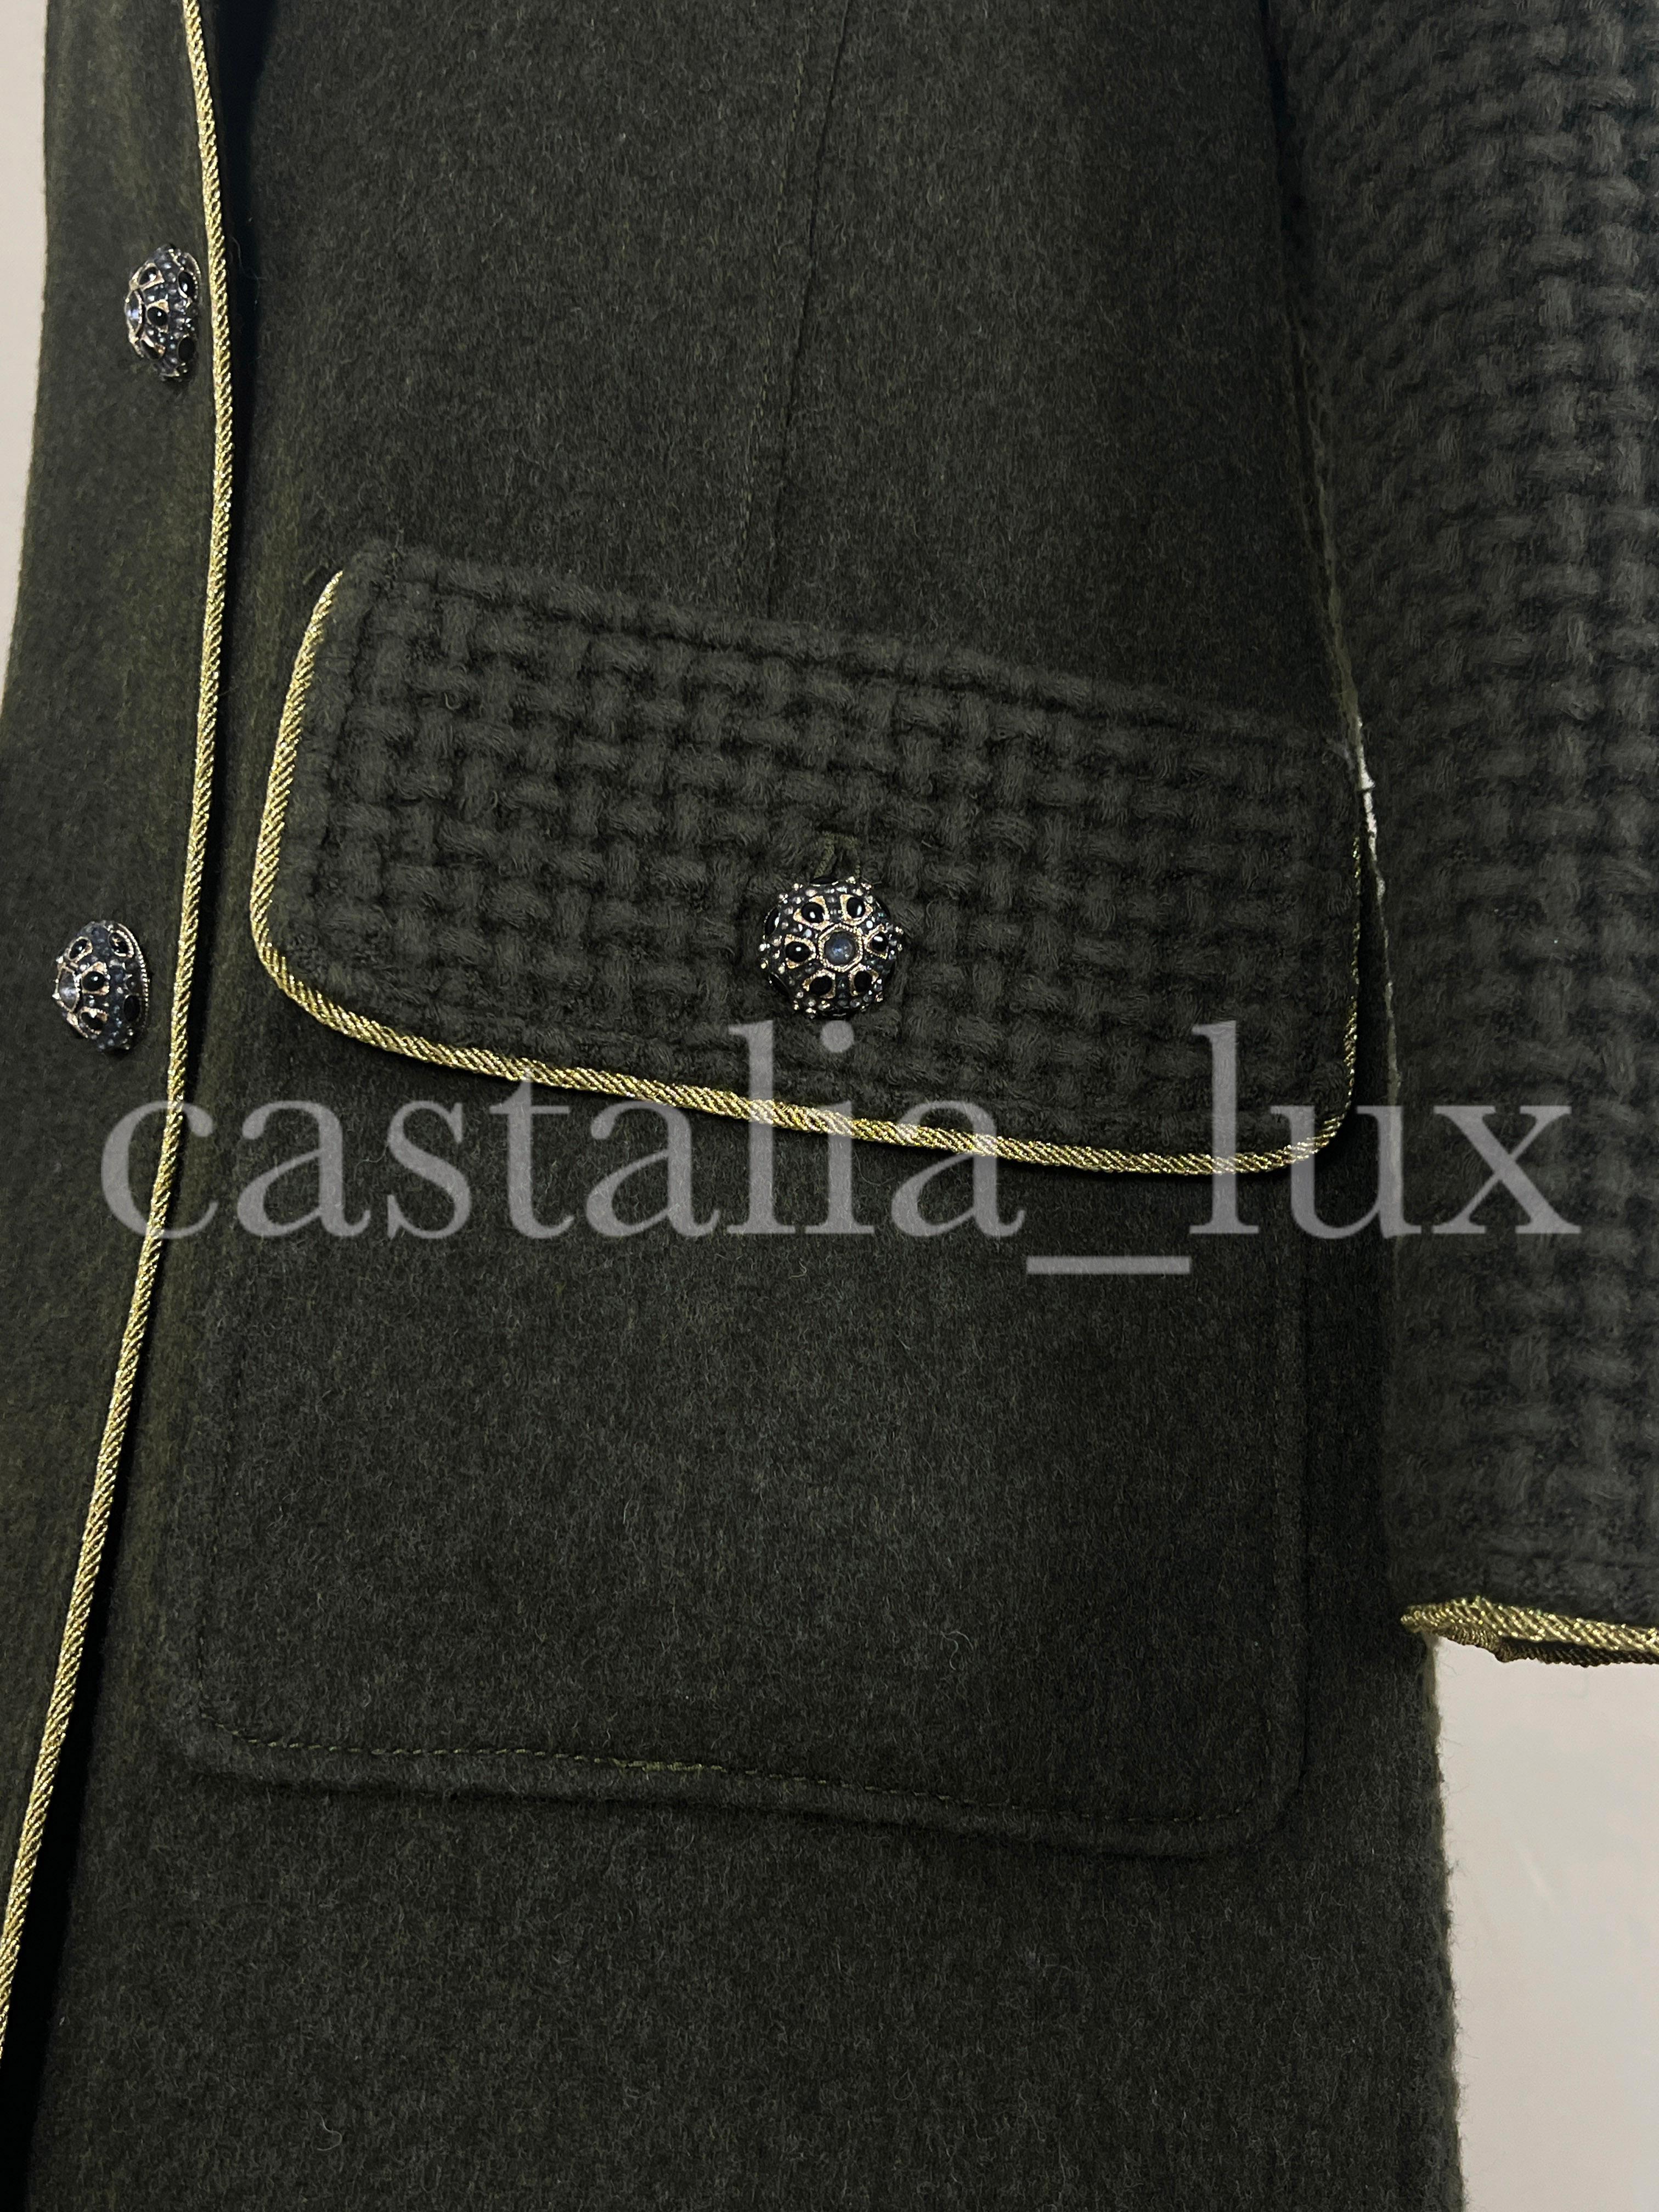 Chanel New Kris Jenner Runway Jewel Buttons Tweed Jacket 9